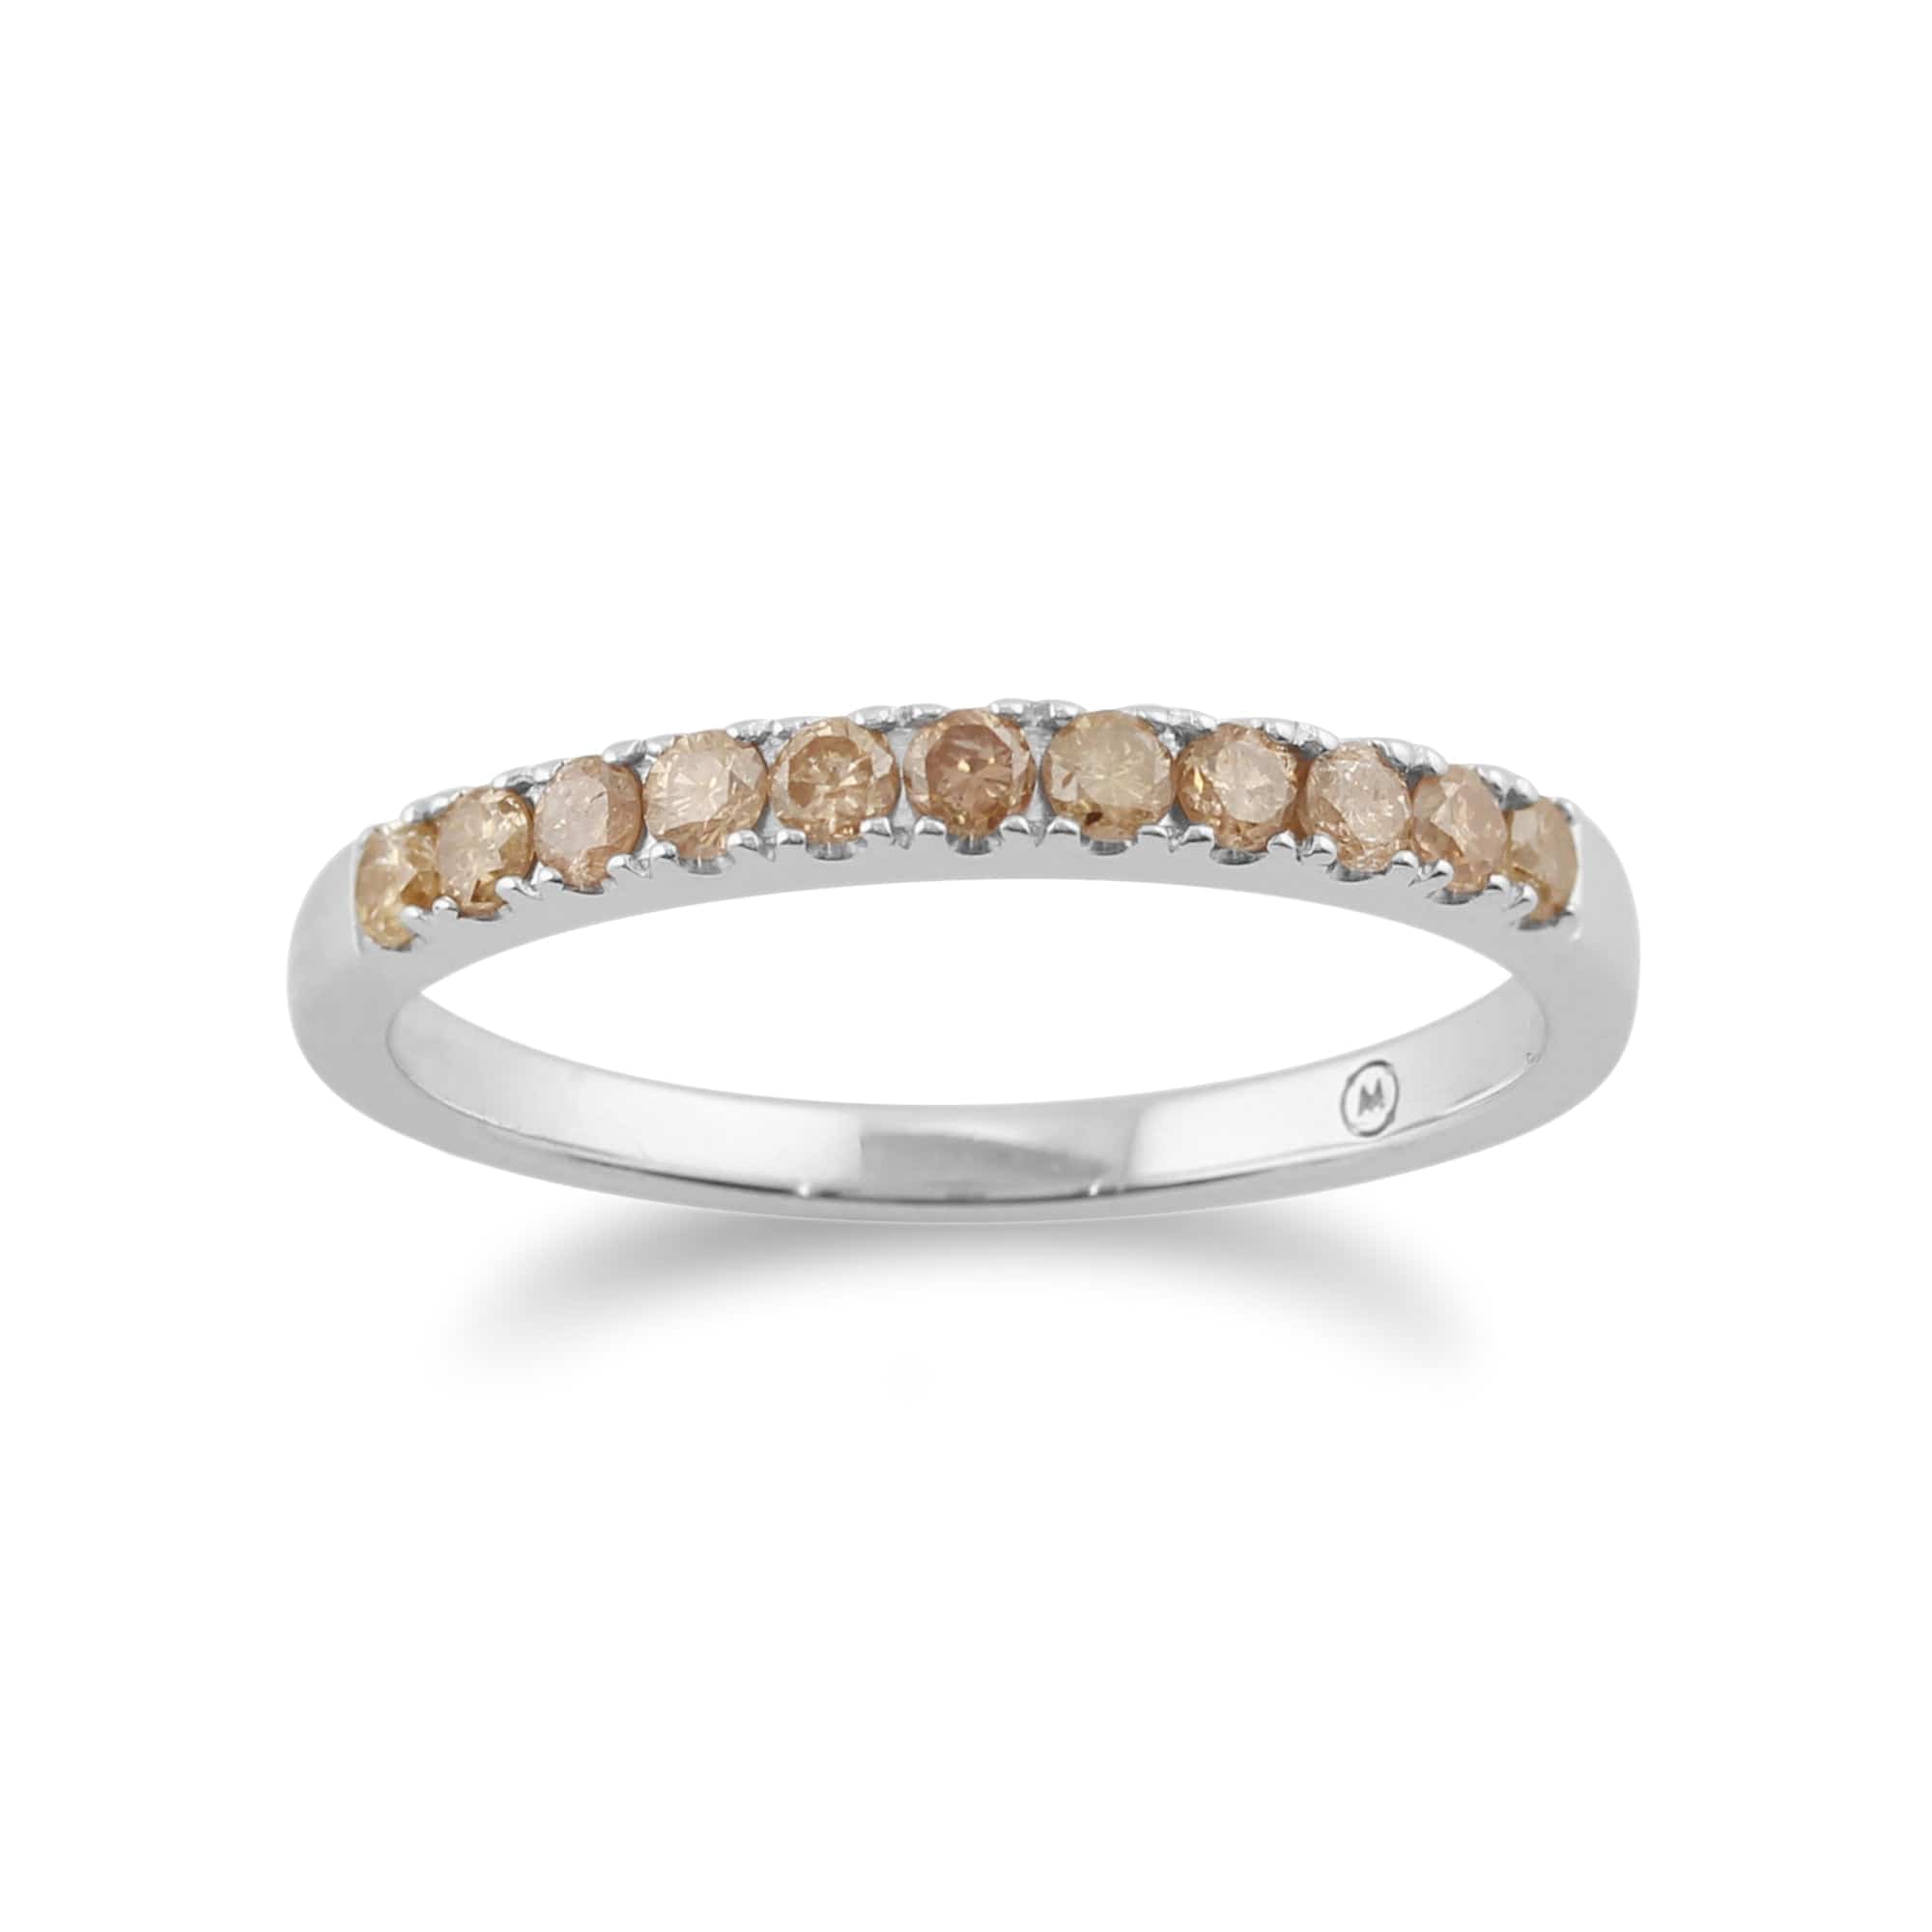 Gemondo 9ct White Gold 0.29ct Champagne Coloured Diamond Eternity Ring Image 1